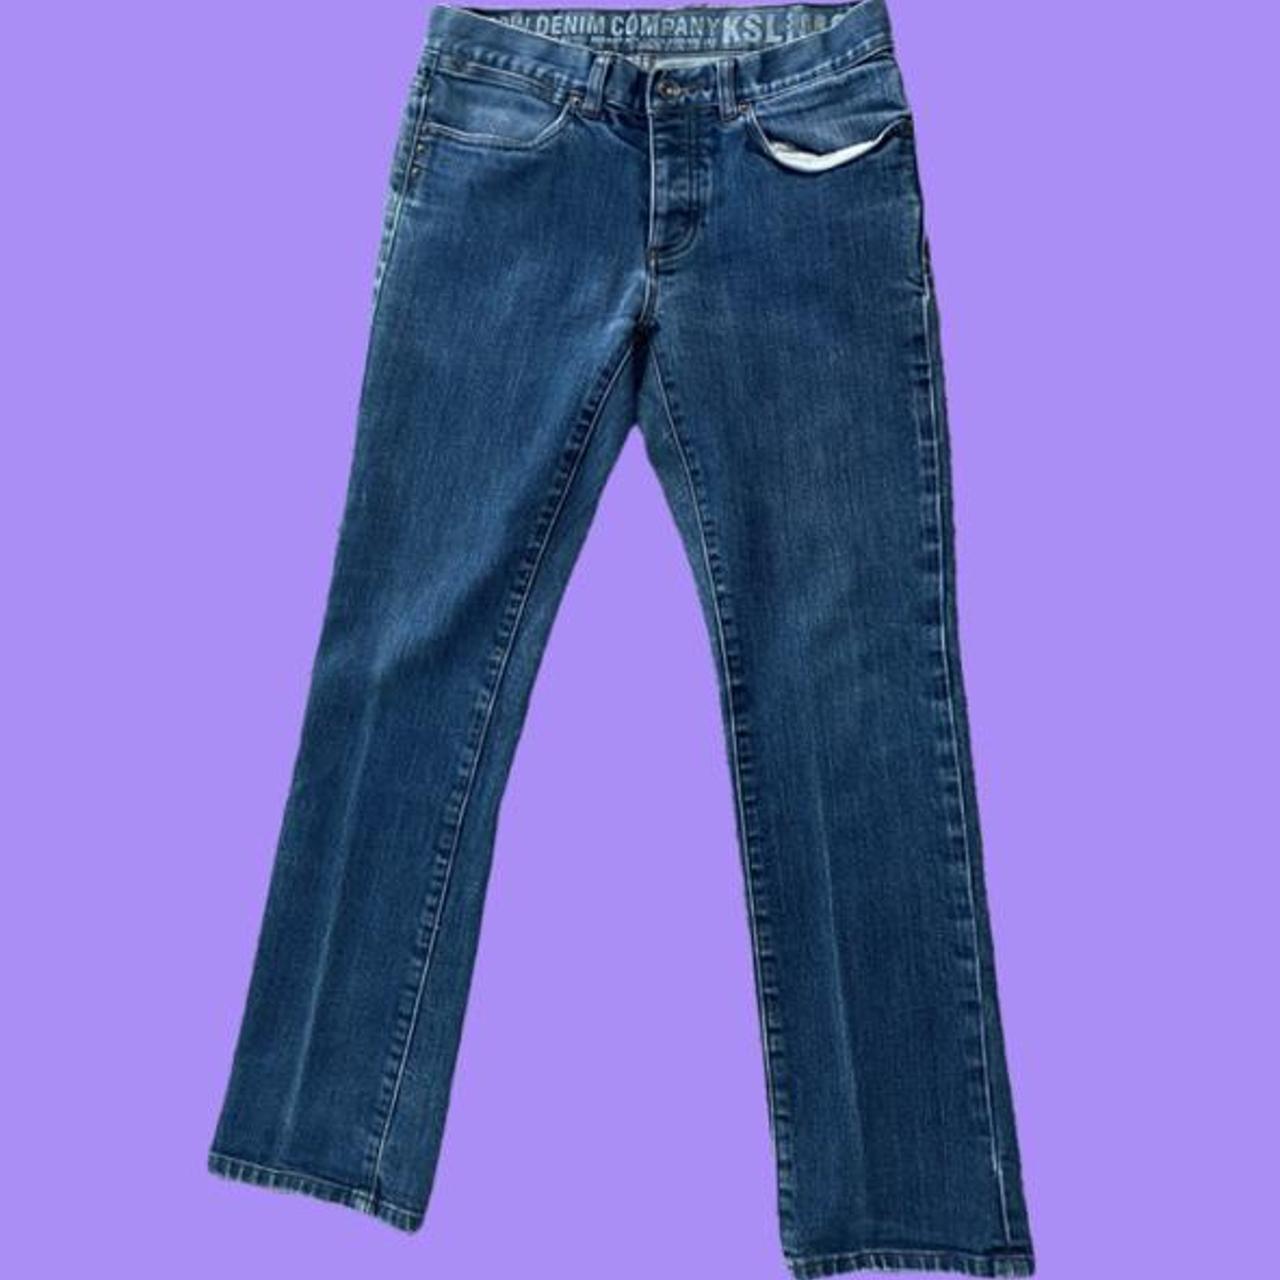 Khaki Krew Women's Blue and Navy Jeans